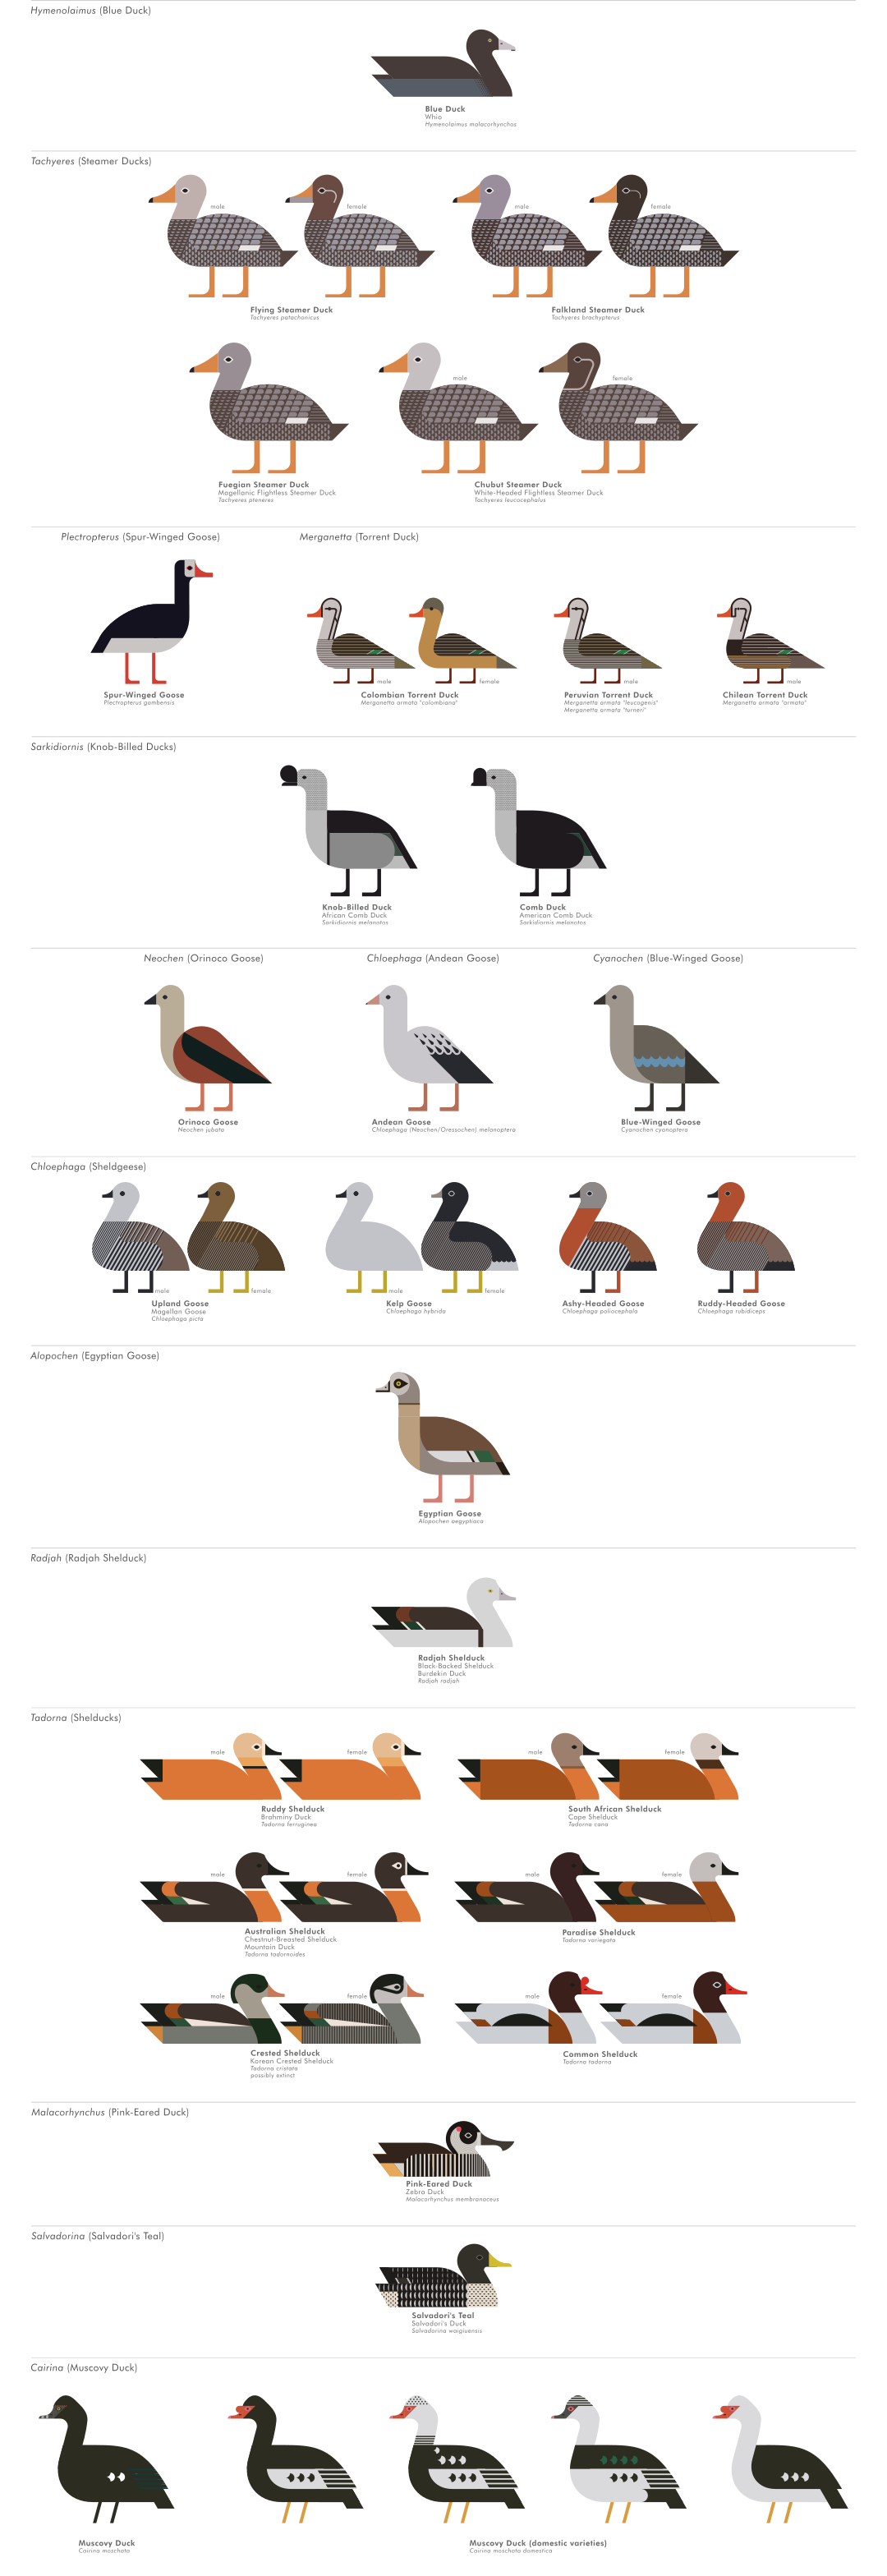 scott partridge - ave - avian vector encyclopedia - shelducks - bird vector art